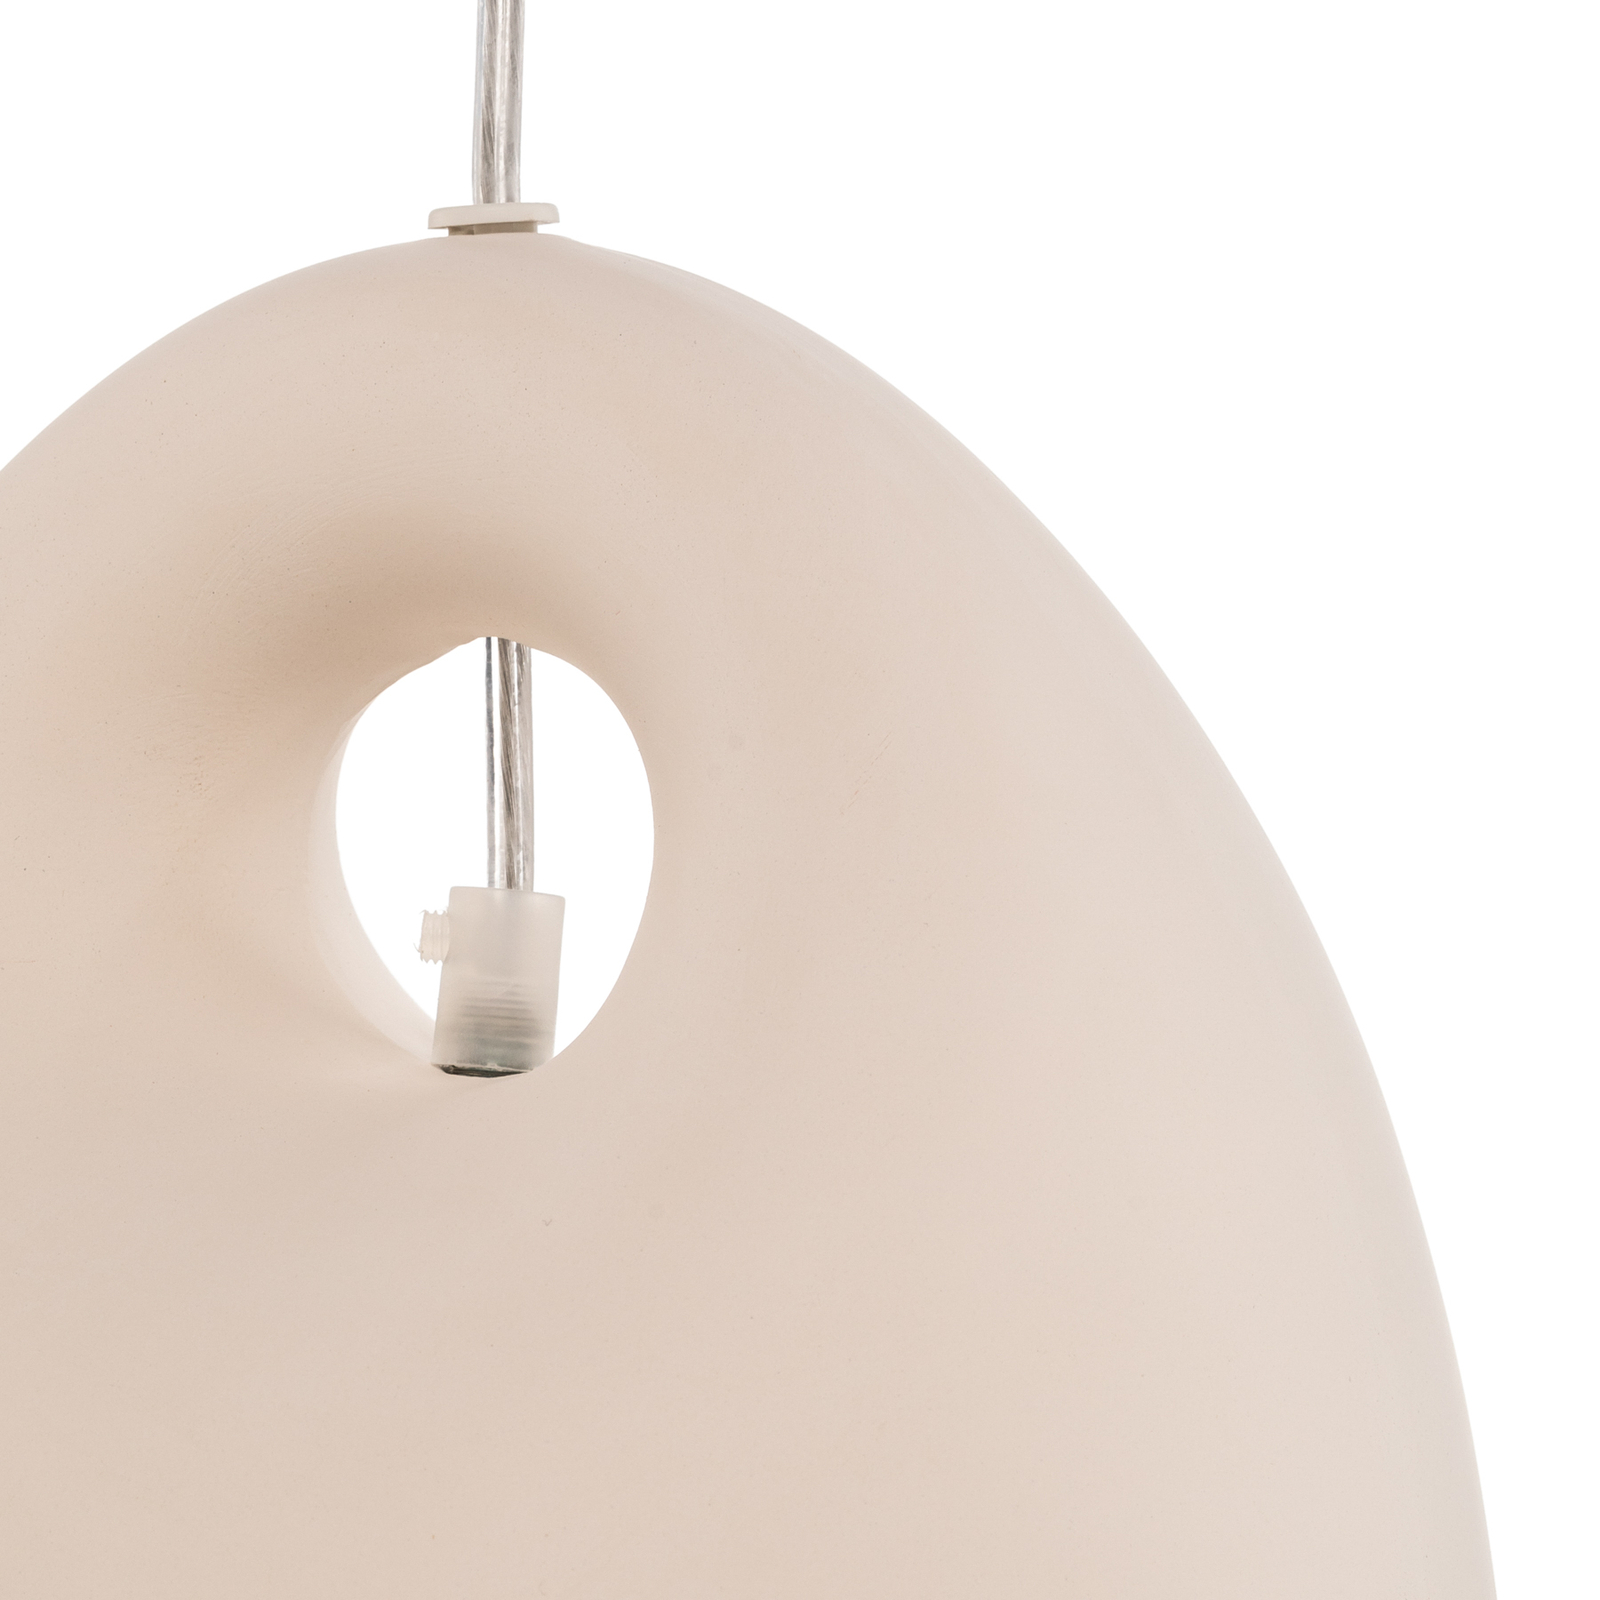 Kano hanging light, white ceramic lampshade